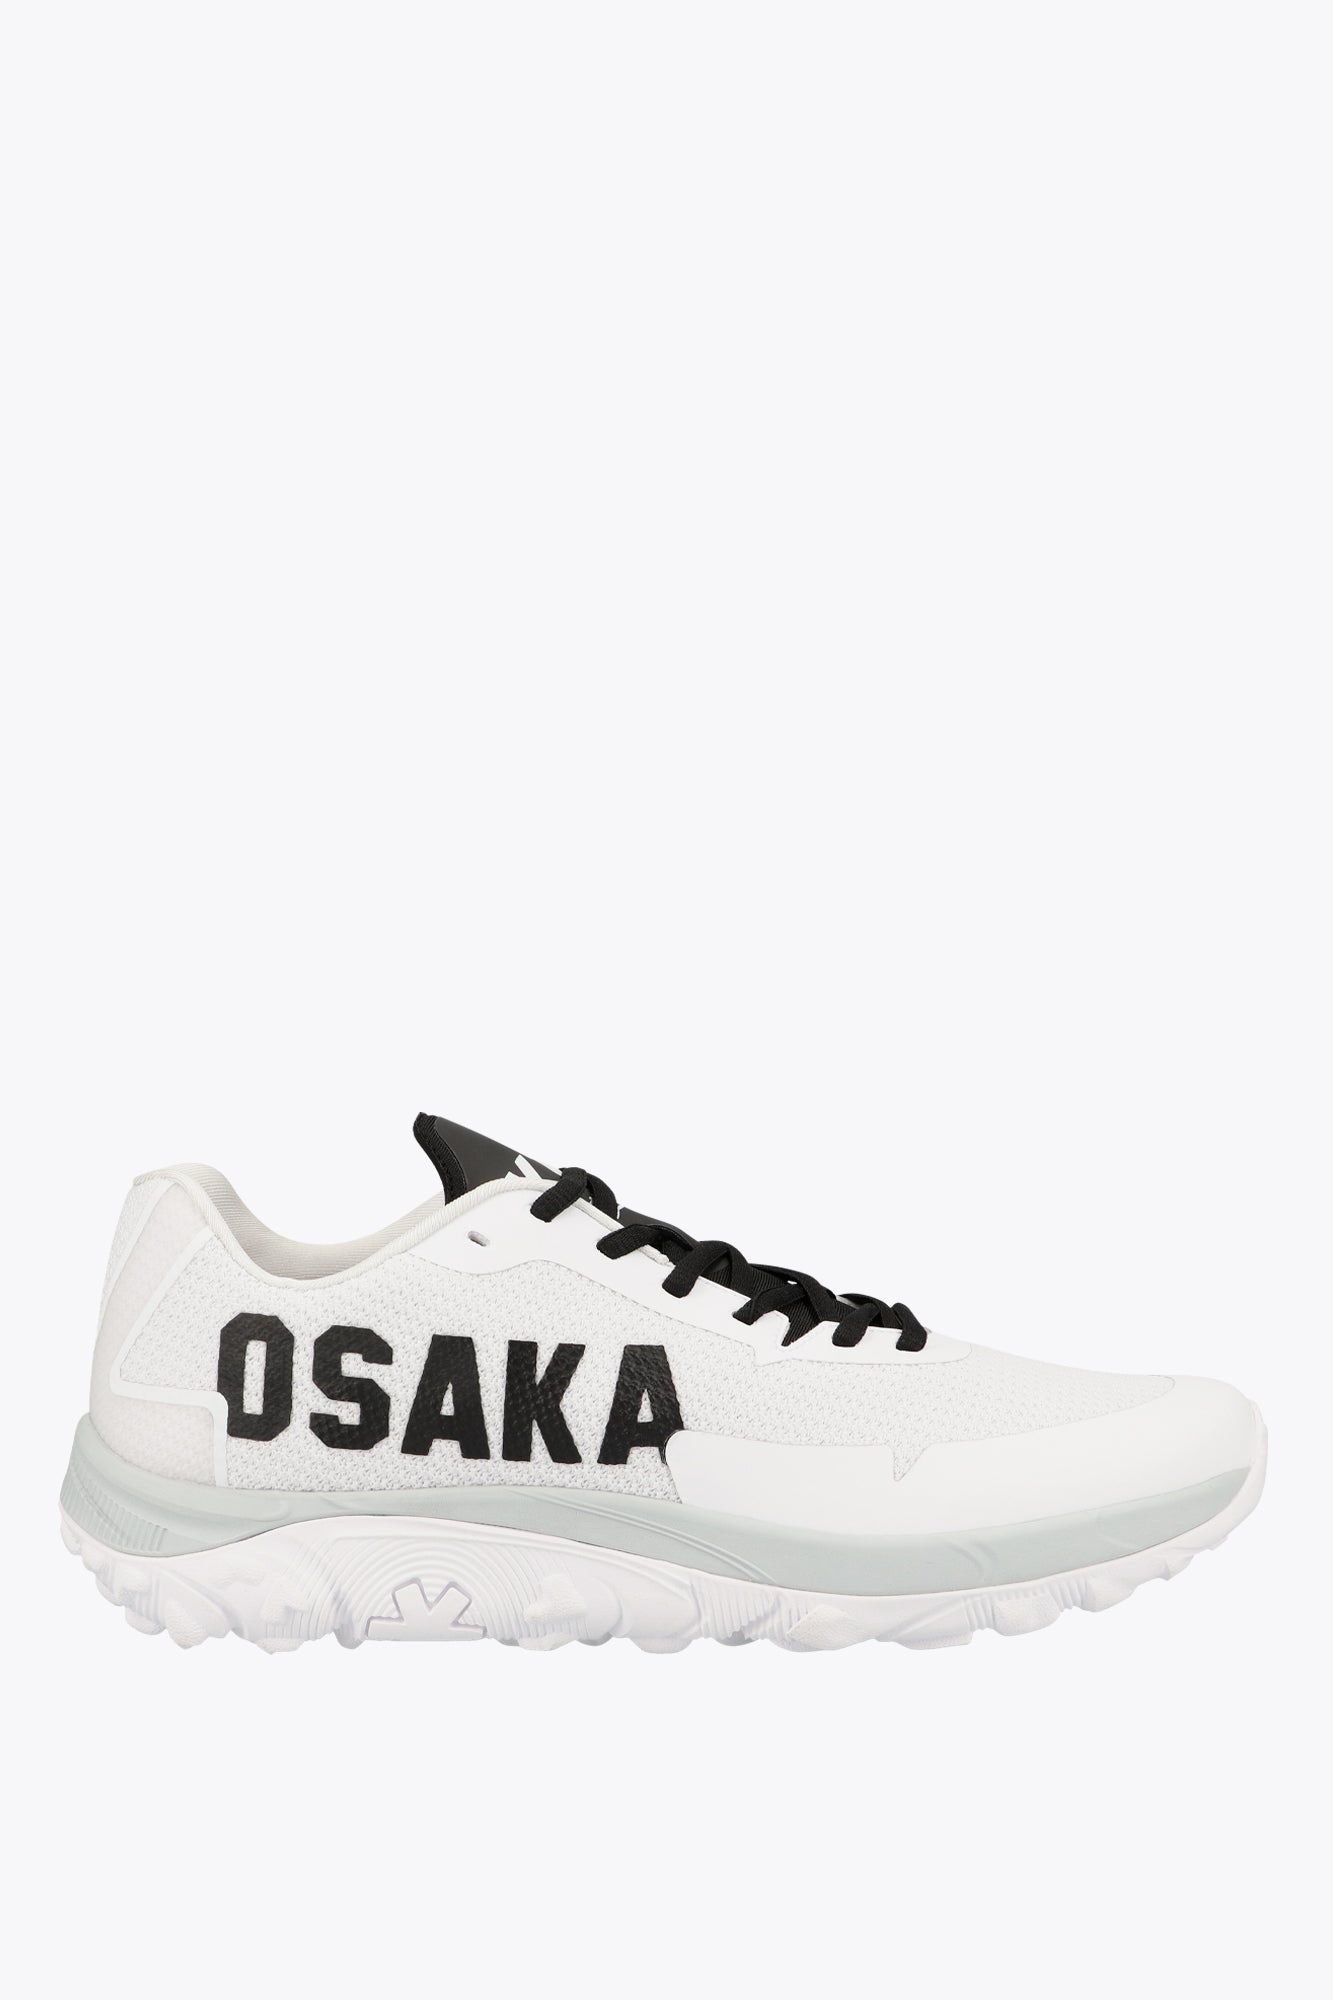 Sluit een verzekering af hardop Zeeslak Osaka Shoenen KAI Mk1 - Iconic White | Osaka World